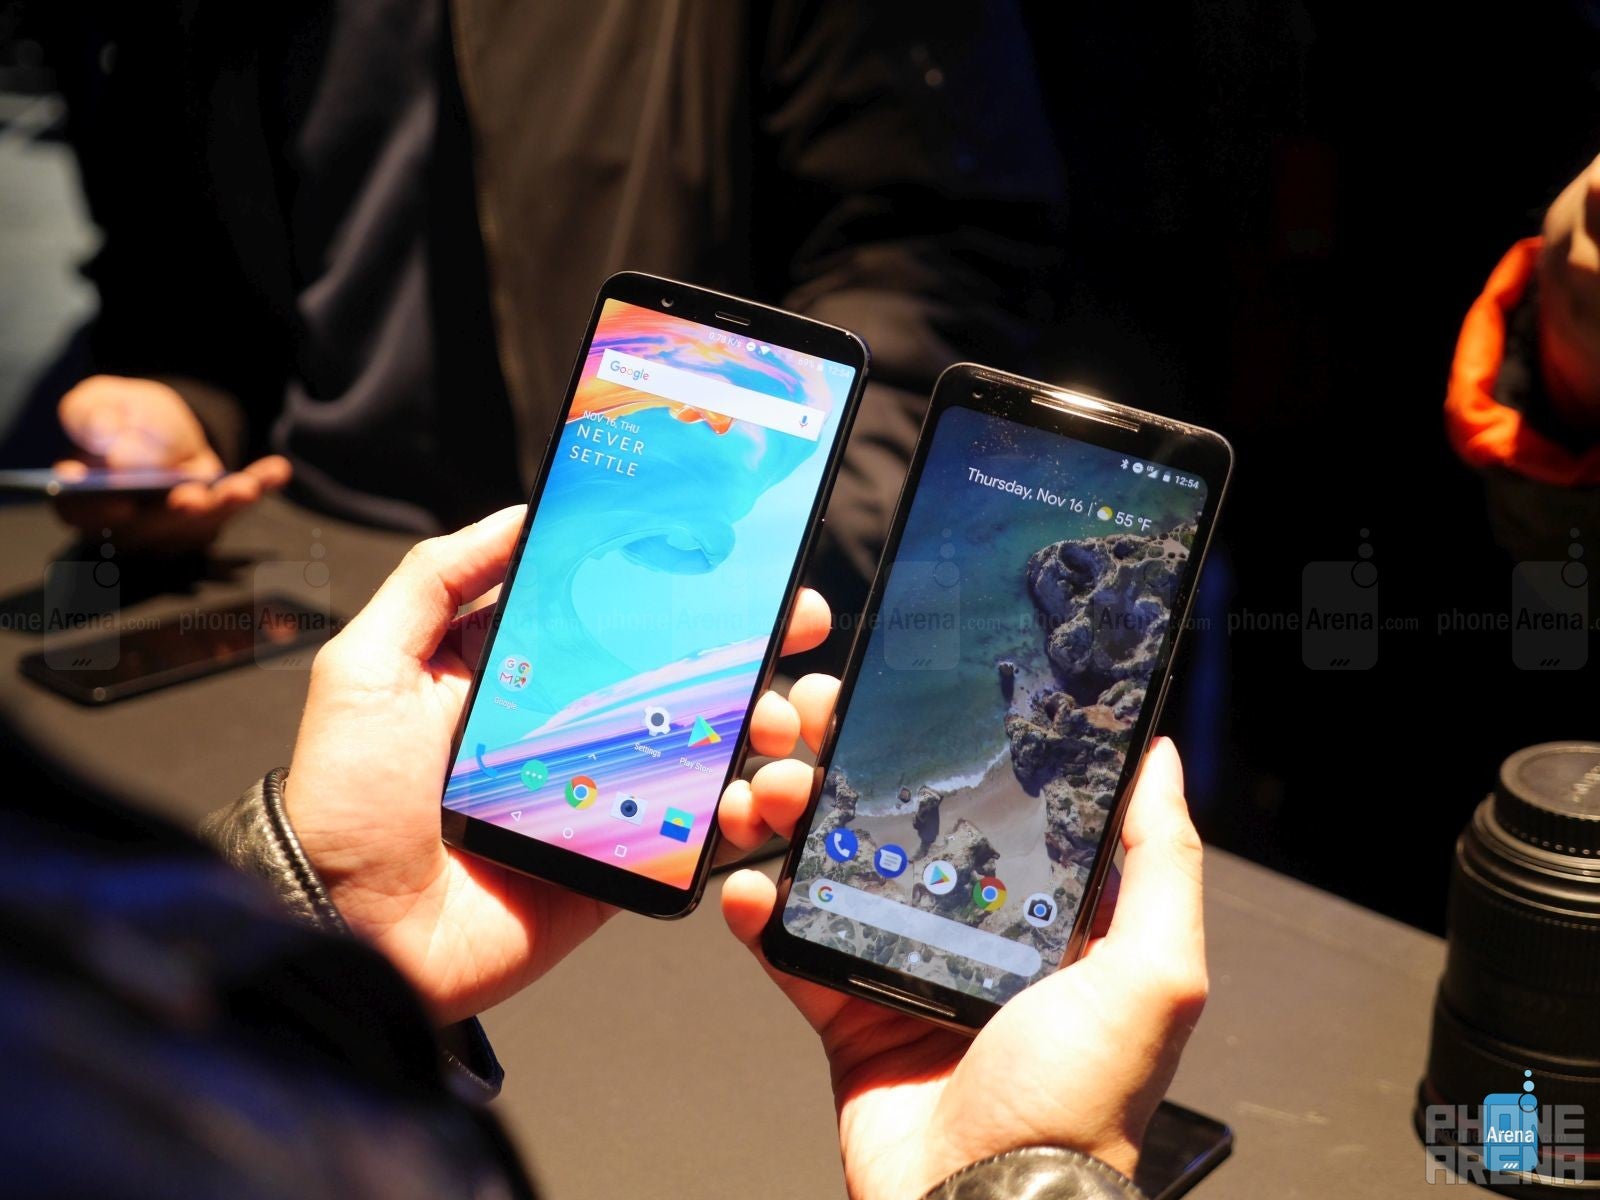 OnePlus 5T vs Google Pixel 2 XL: first look